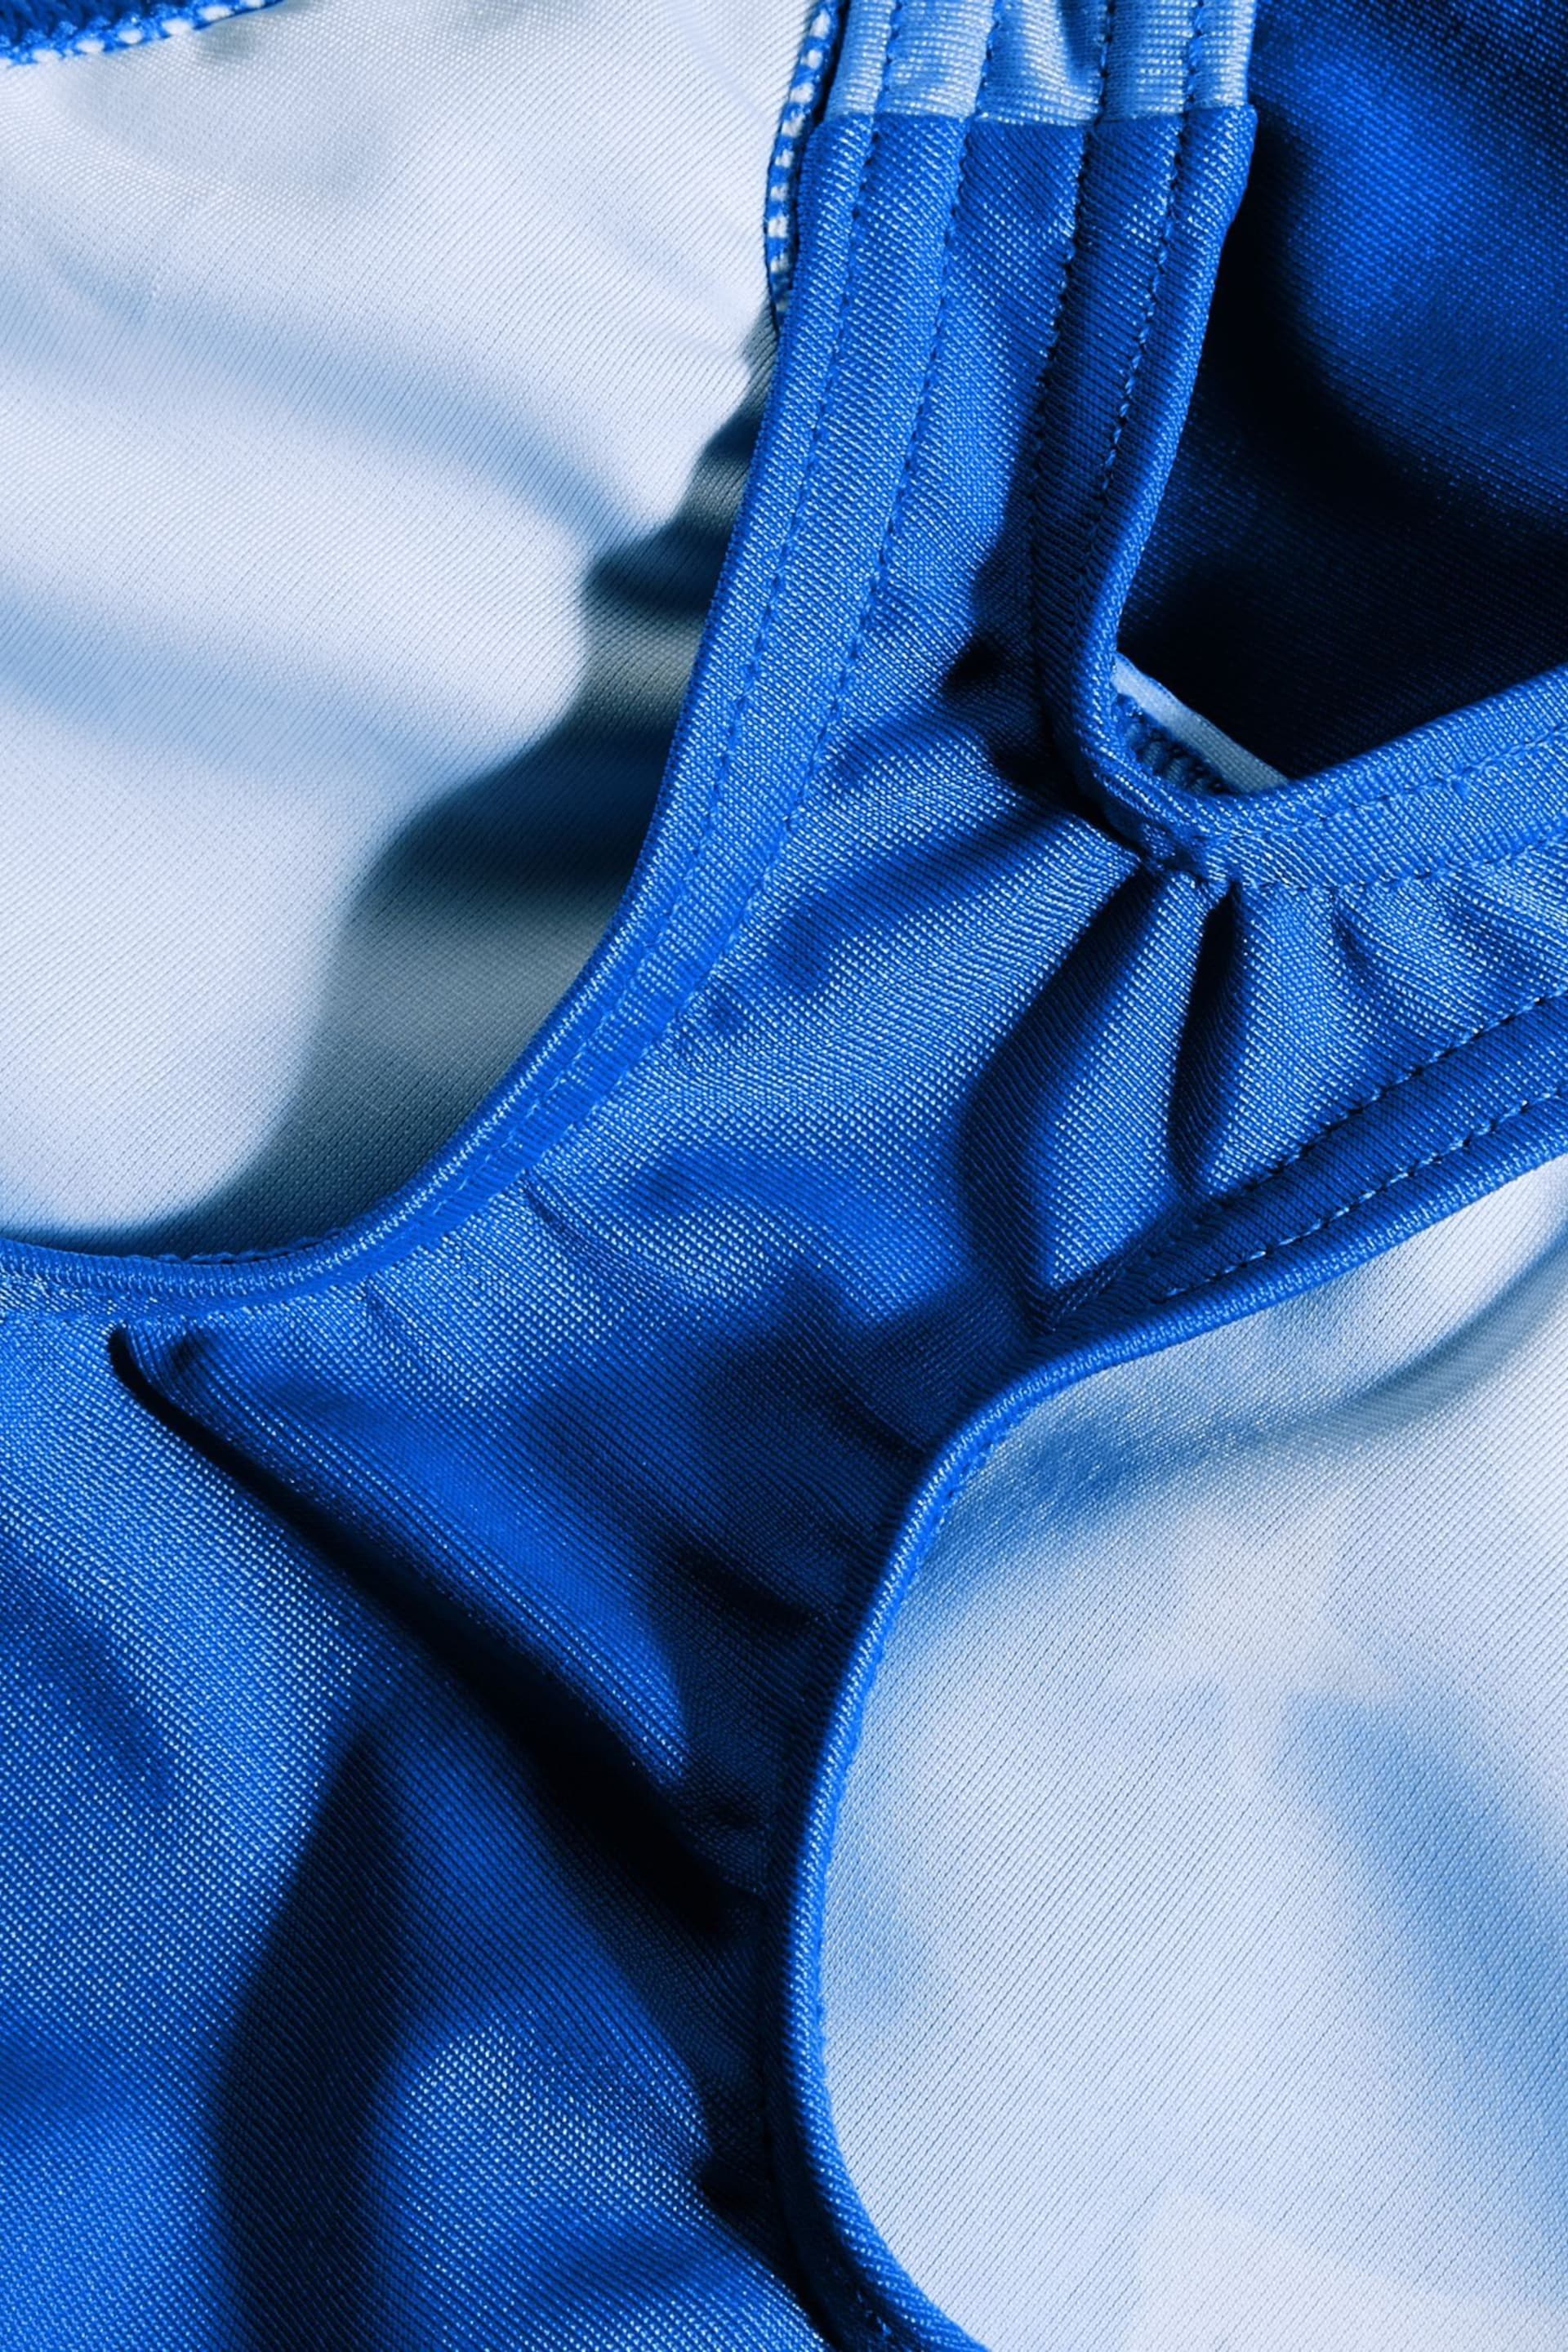 Speedo Girls Blue Digital Printed Swimsuit - Image 4 of 5